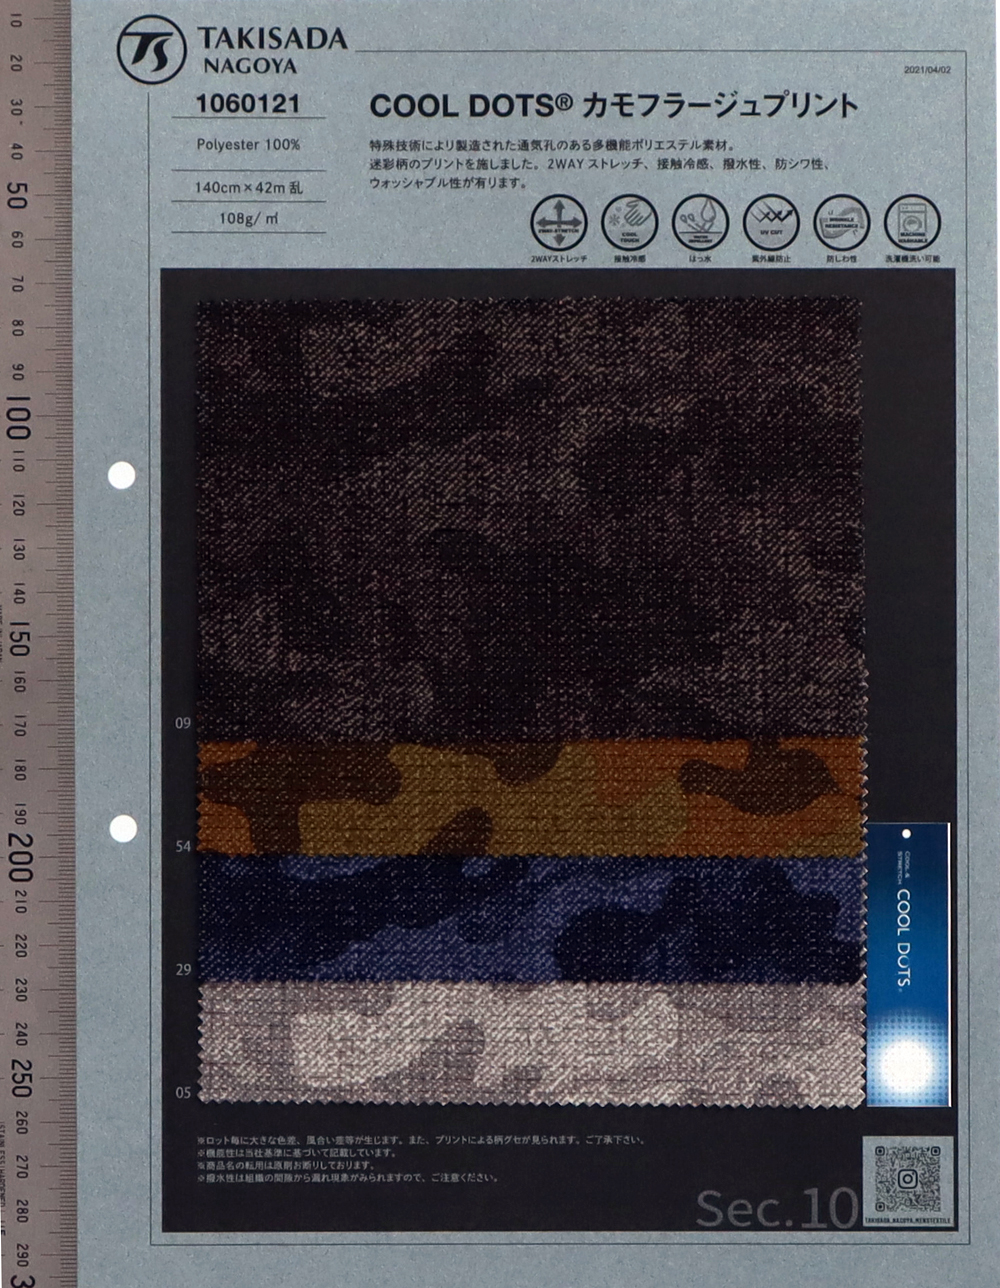 1060121 Estampado De Camuflaje COOL DOTS®[Fabrica Textil] Takisada Nagoya